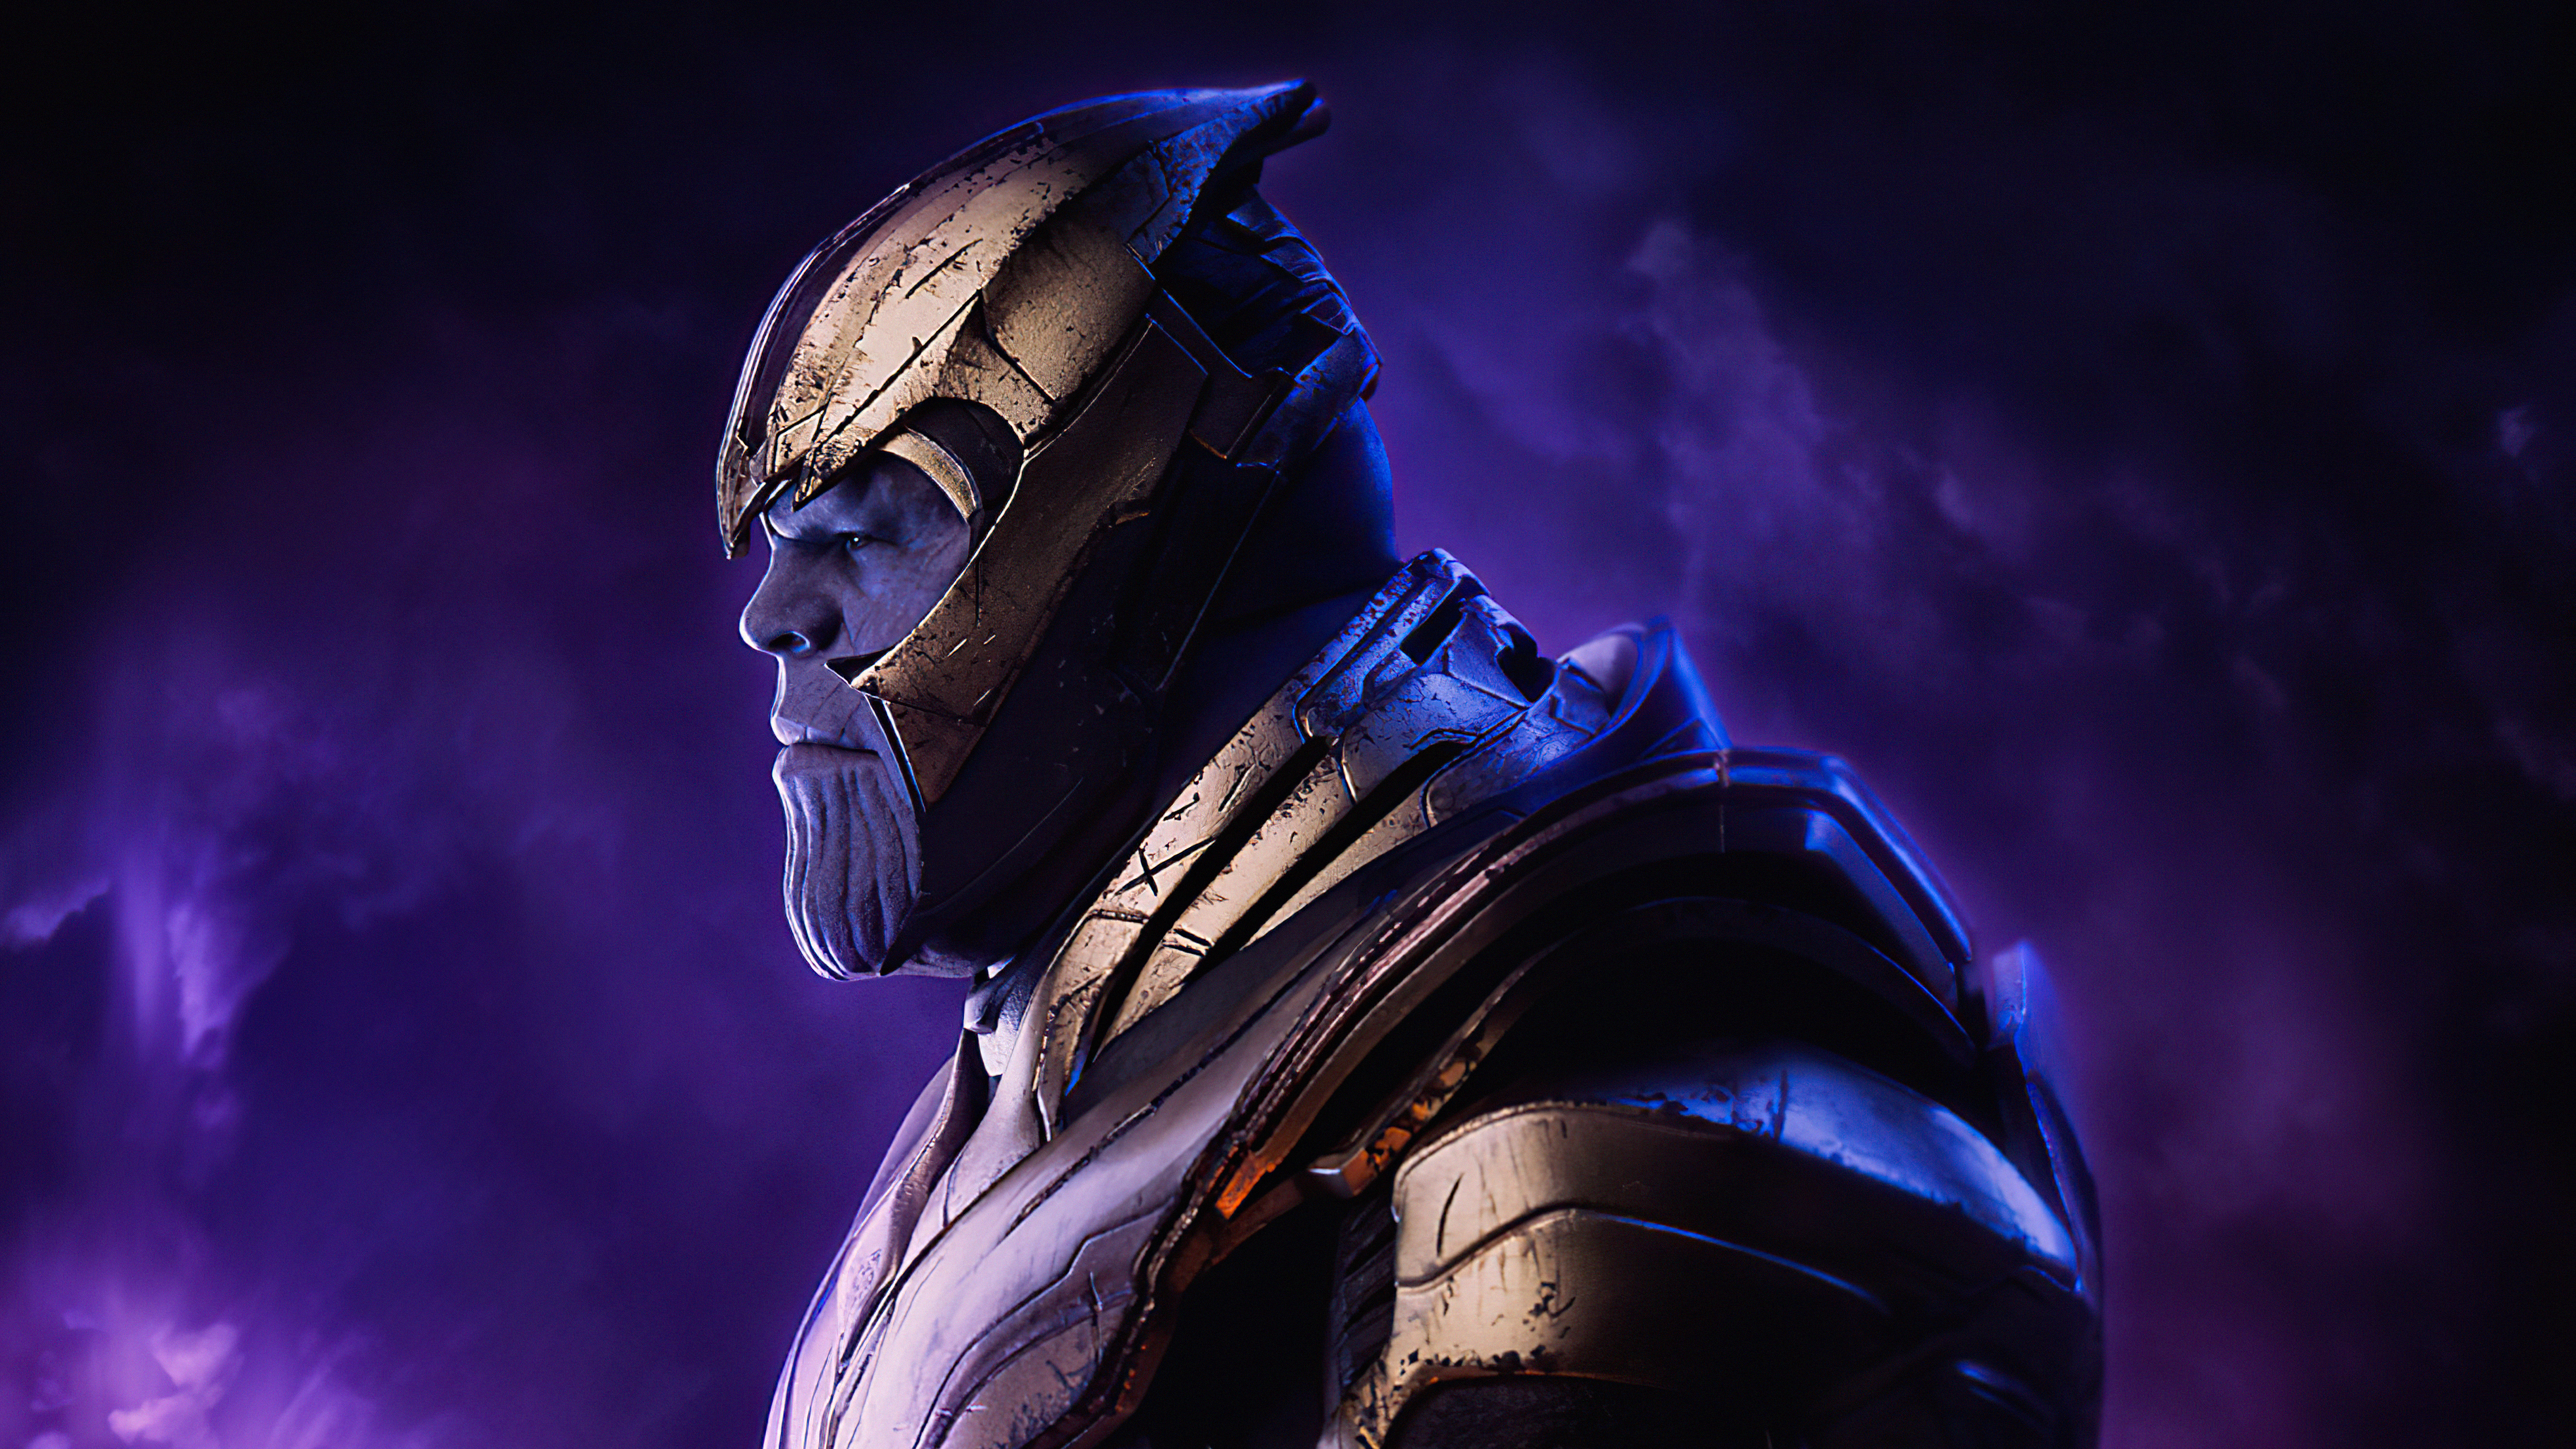 Movie Avengers: Infinity War 4k Ultra HD Wallpaper by Alex Brooks